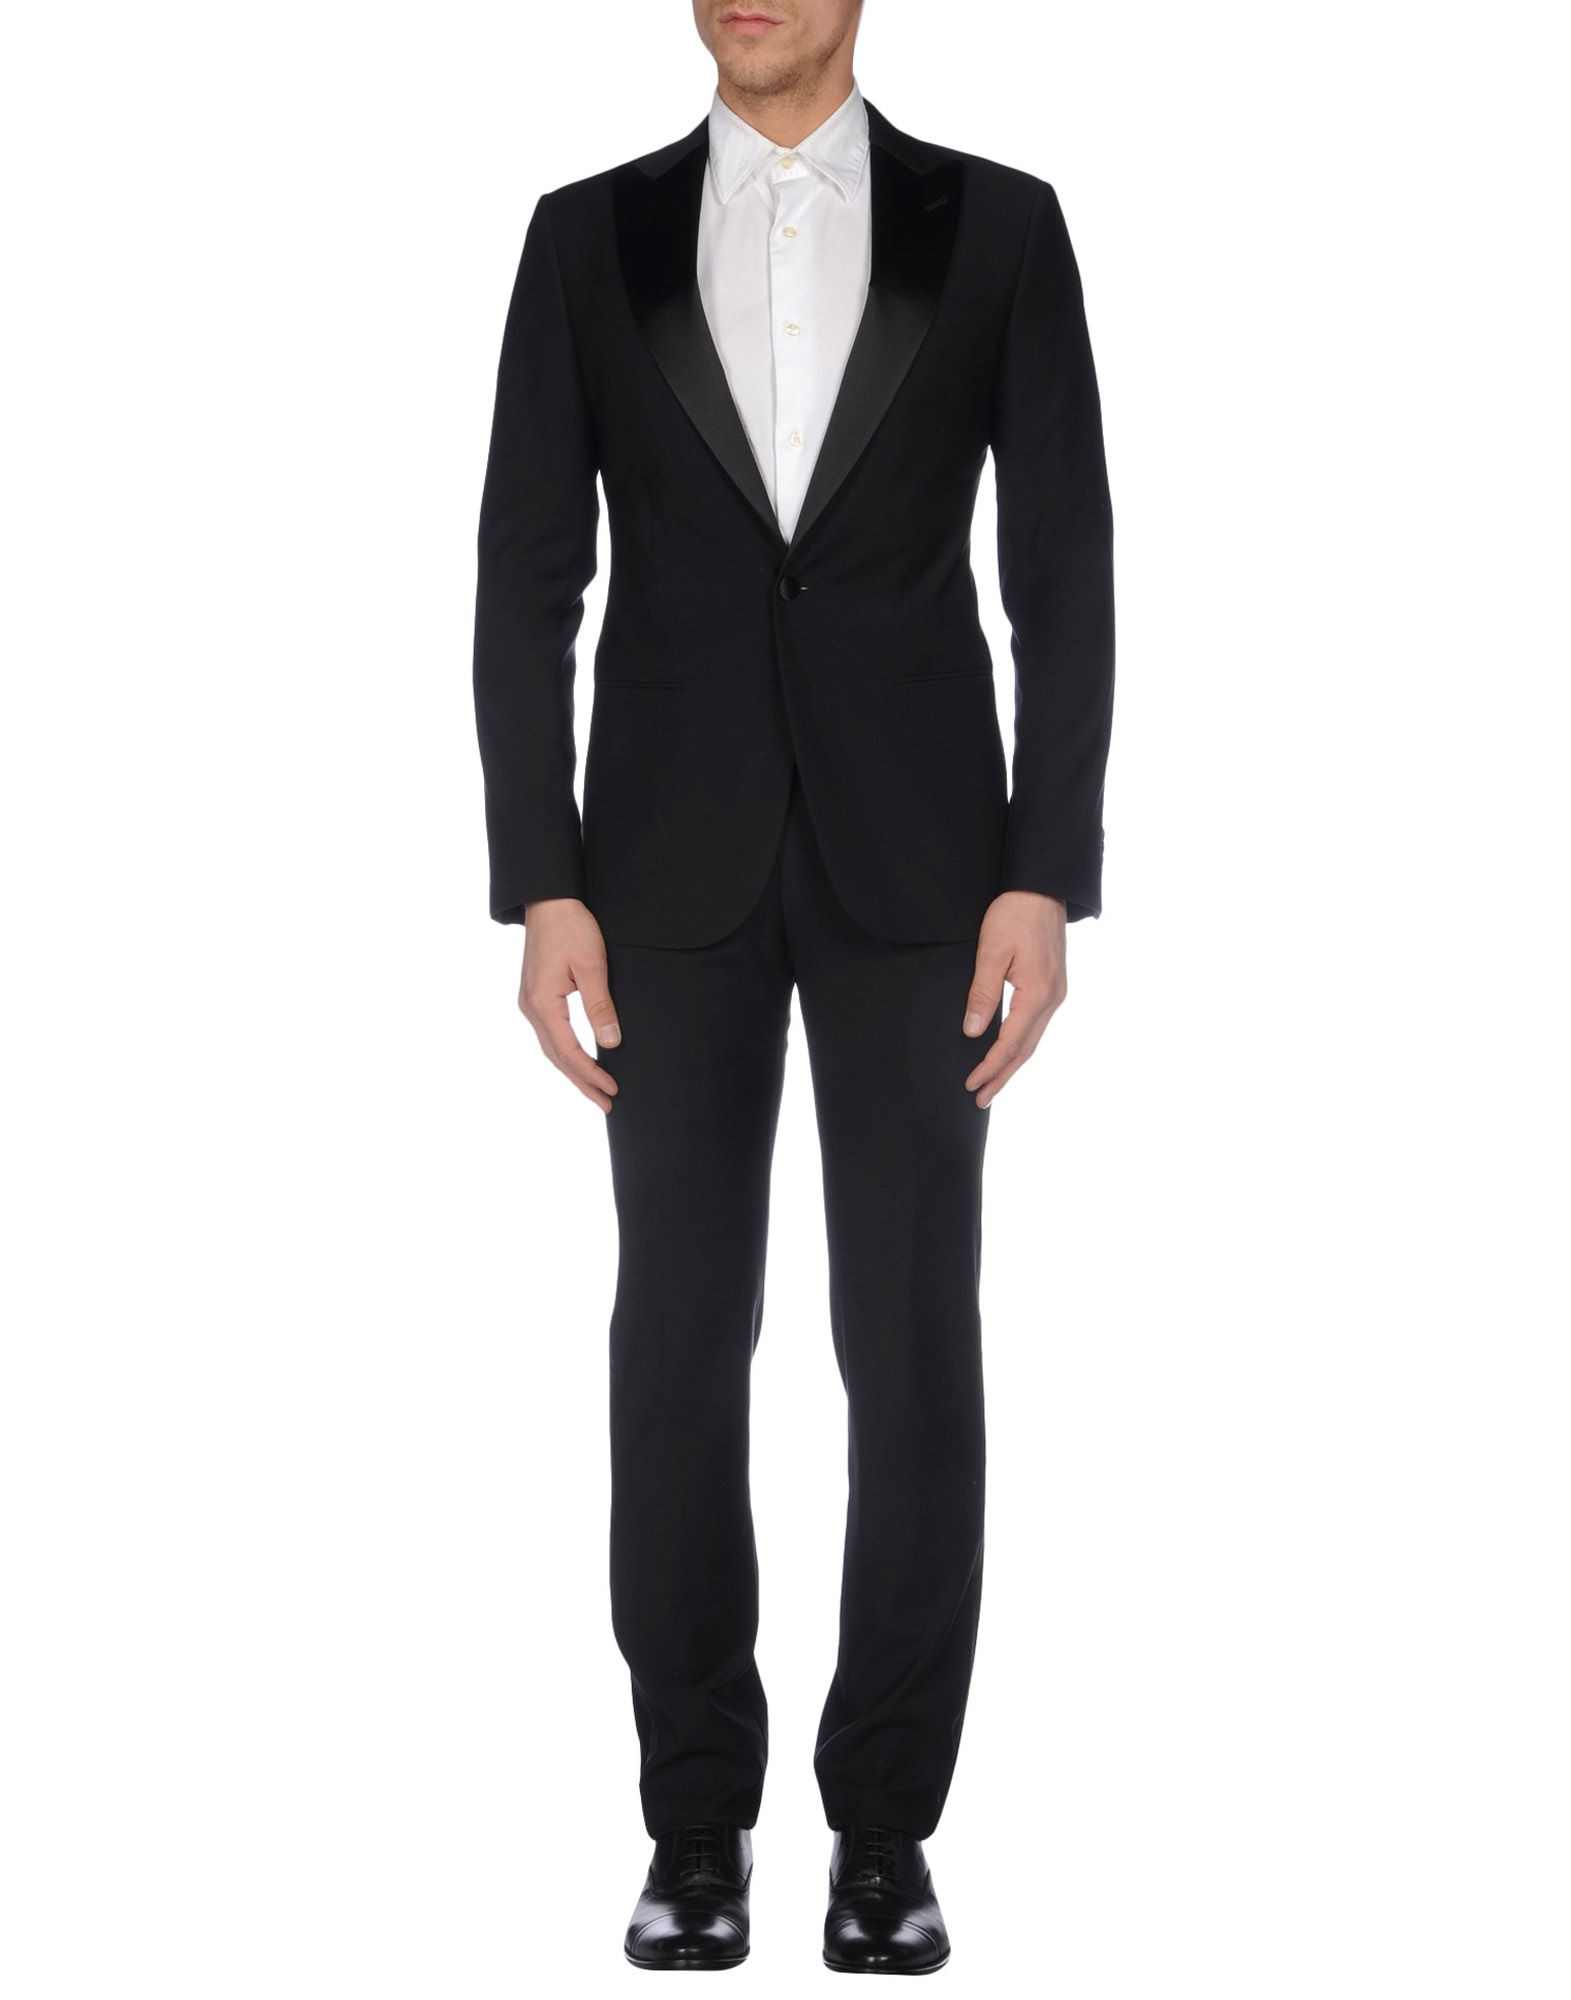 Lyst - Giorgio Armani Suit in Black for Men